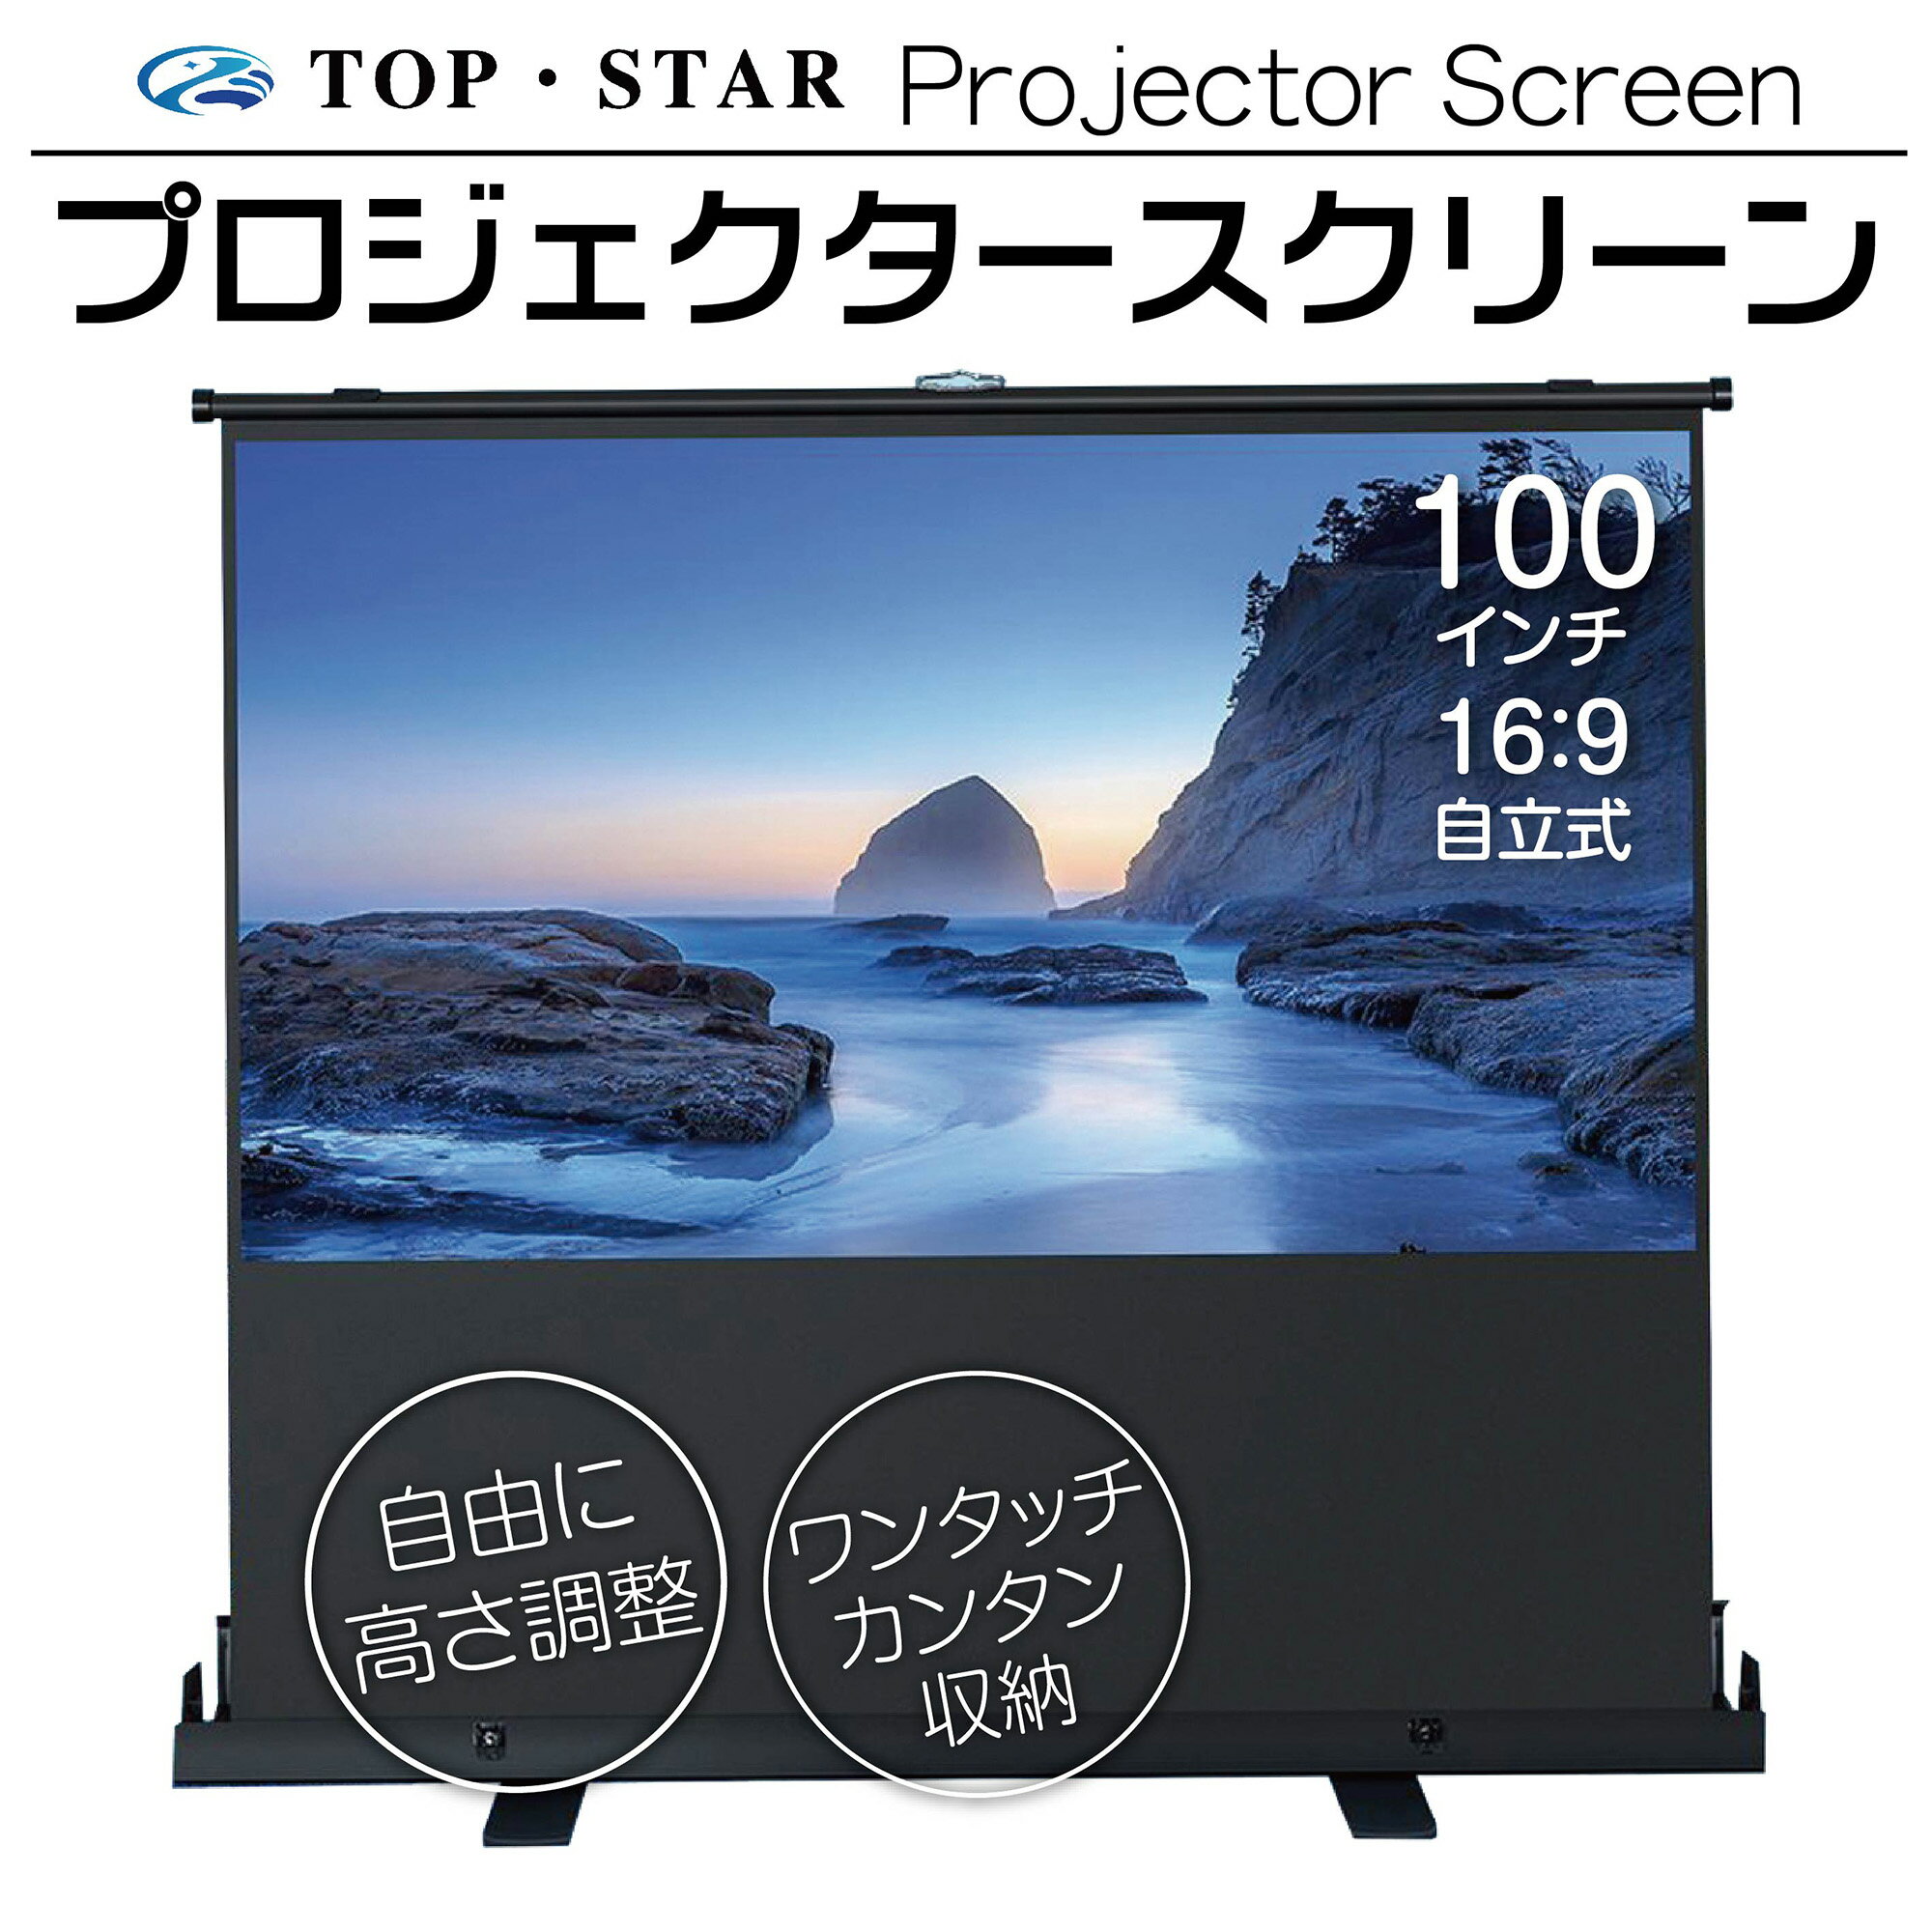 TOP STAR プロジェクタースクリーン 100インチ 16:9プロジェクター用 自立式 小型 家庭用 自立 (PJS-100-169)